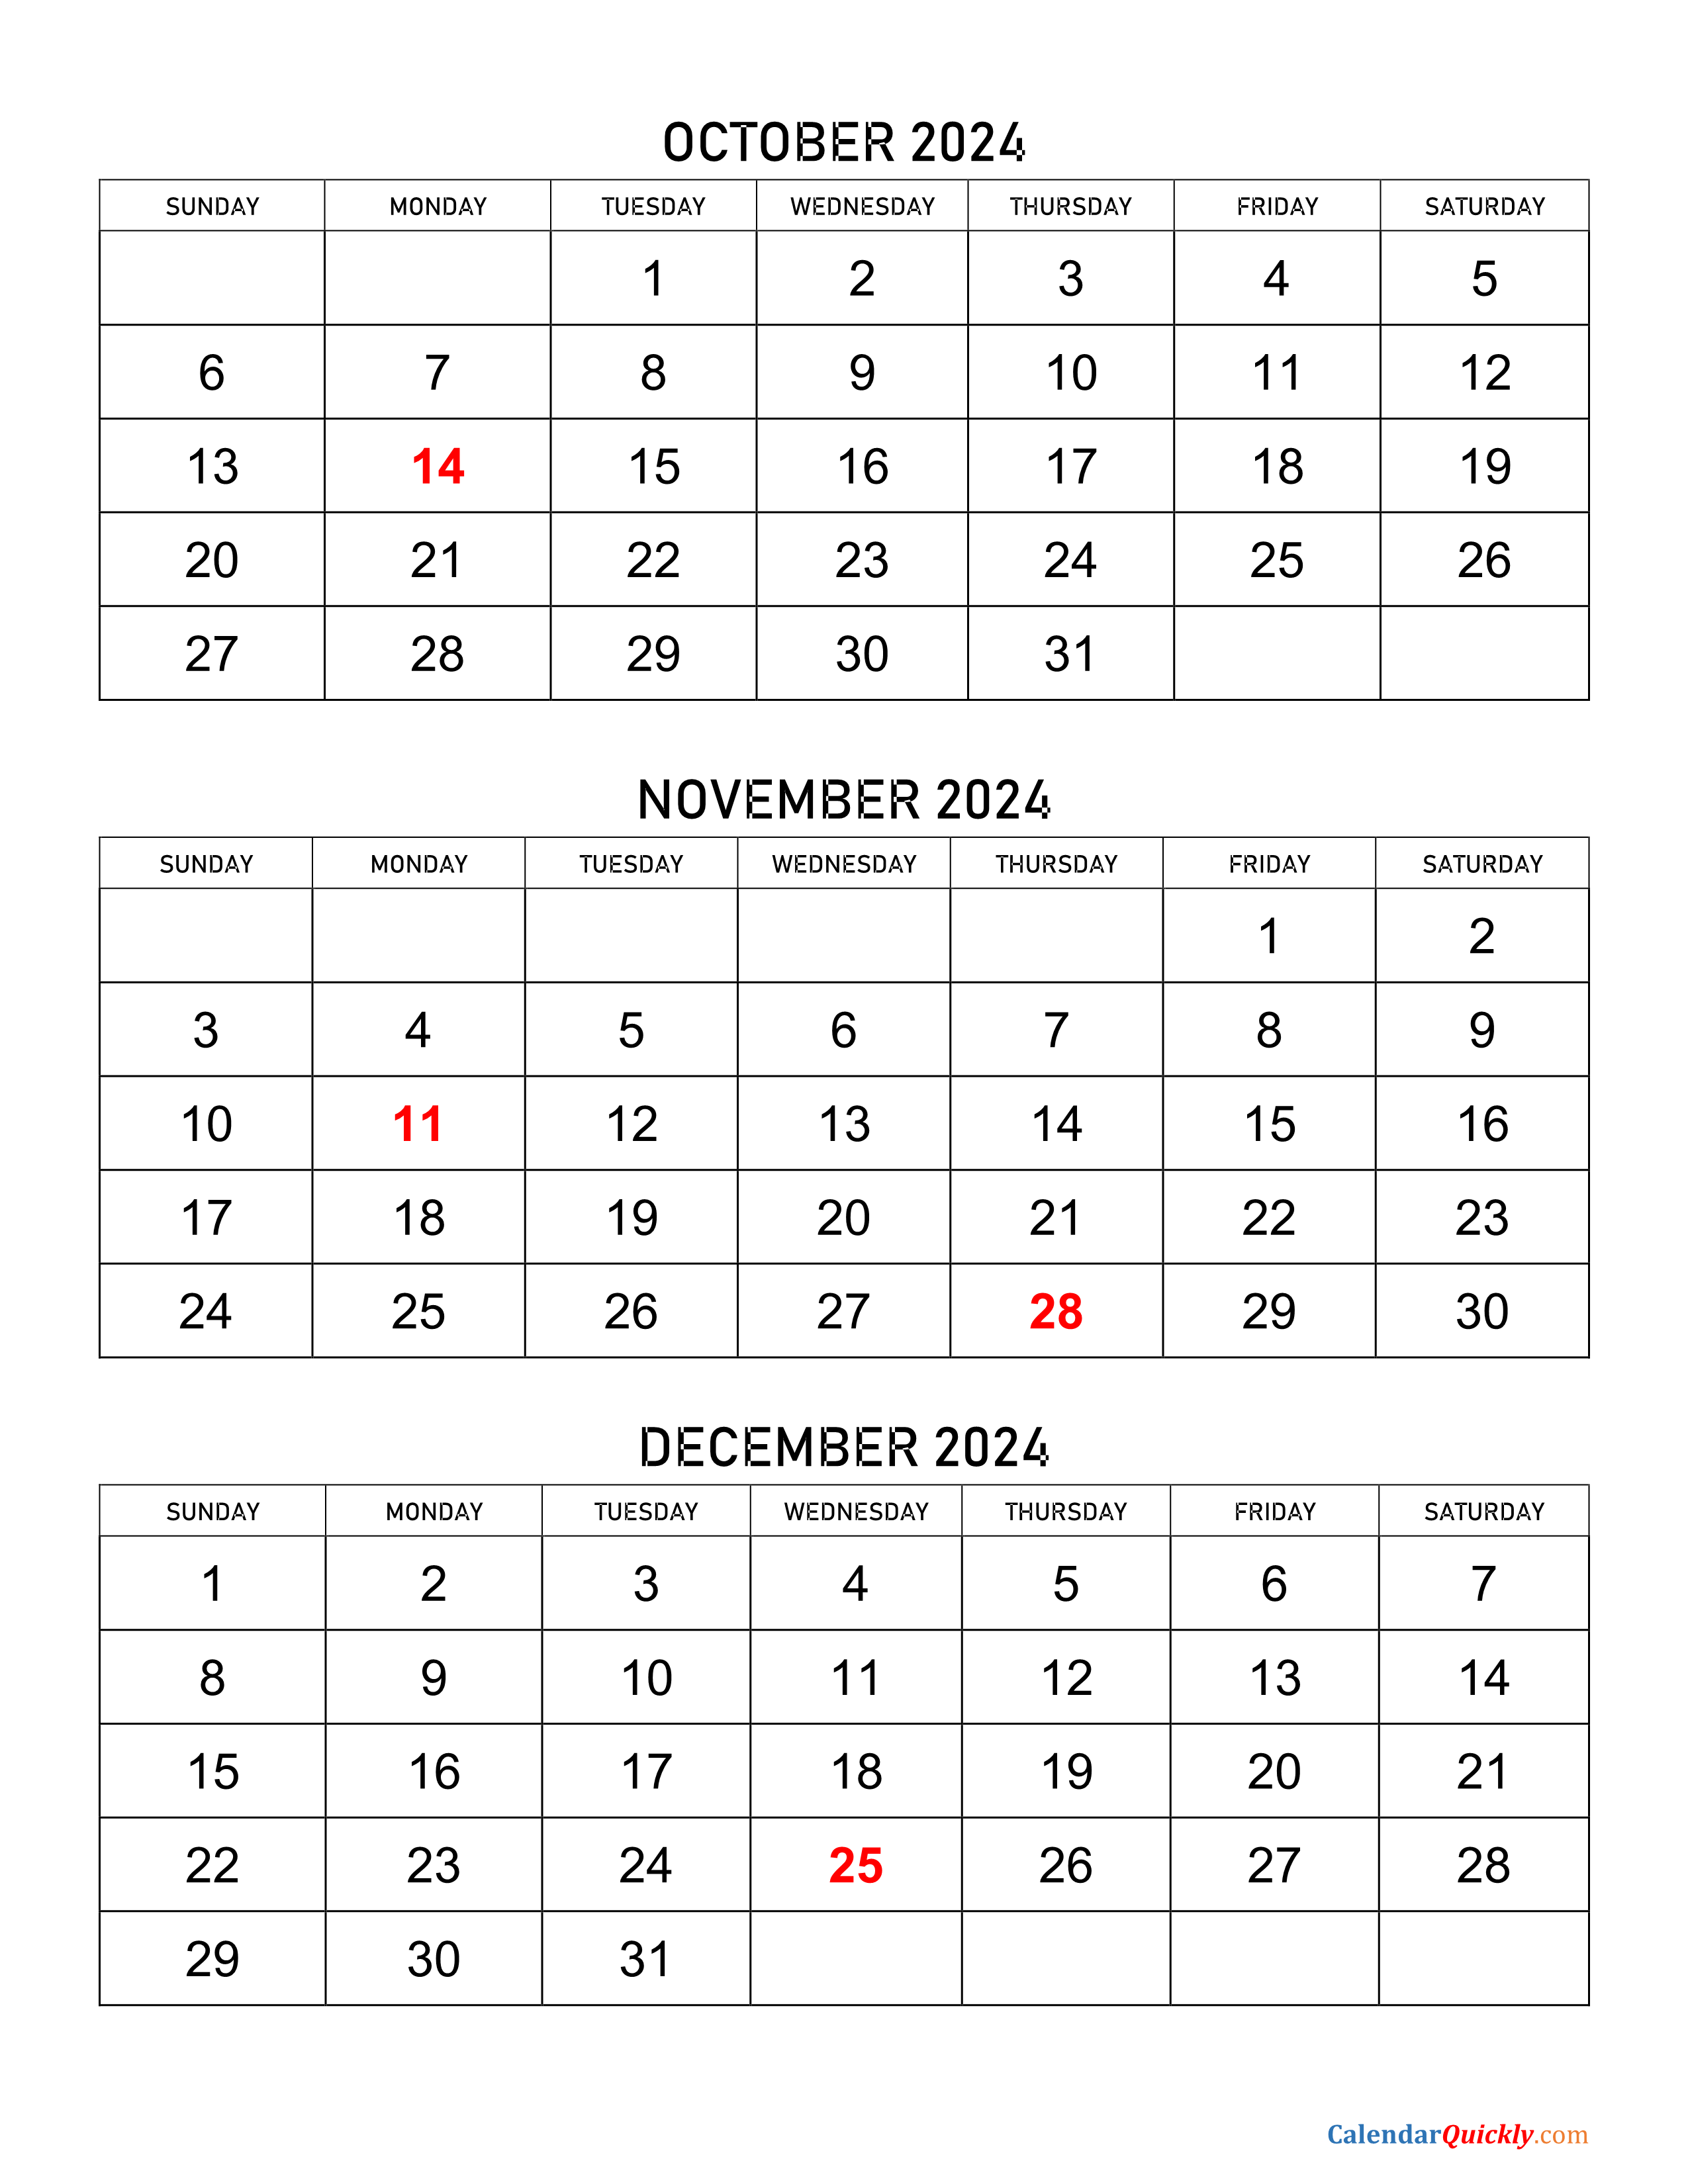 2024 October November December Calendar Printable 2024 CALENDAR PRINTABLE - Free Printable 2024 December Calendar Template